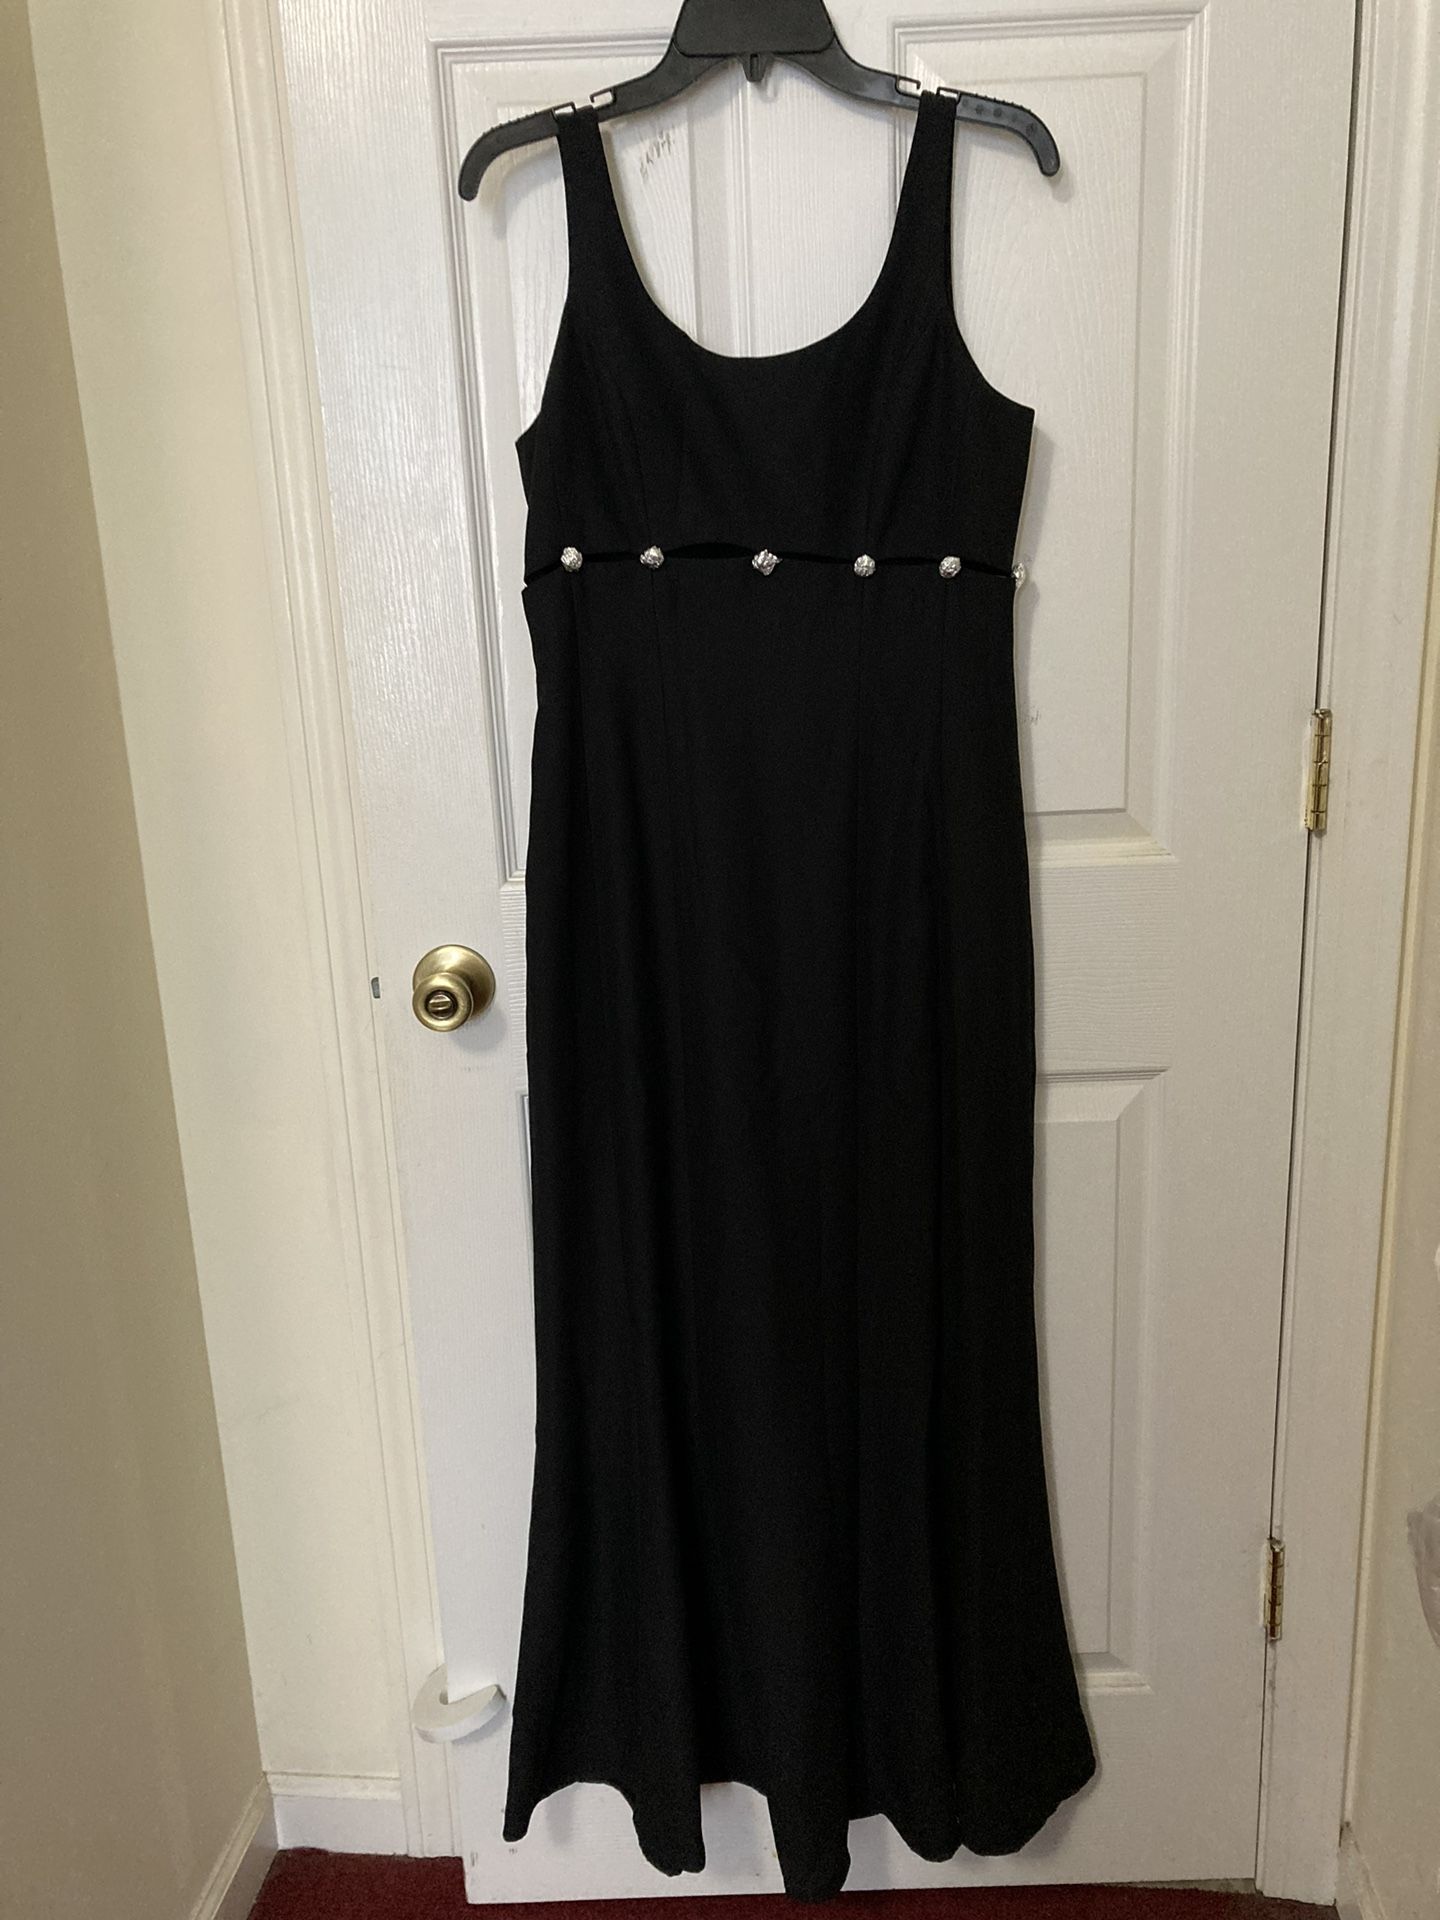 Black Maxi dress Size 8